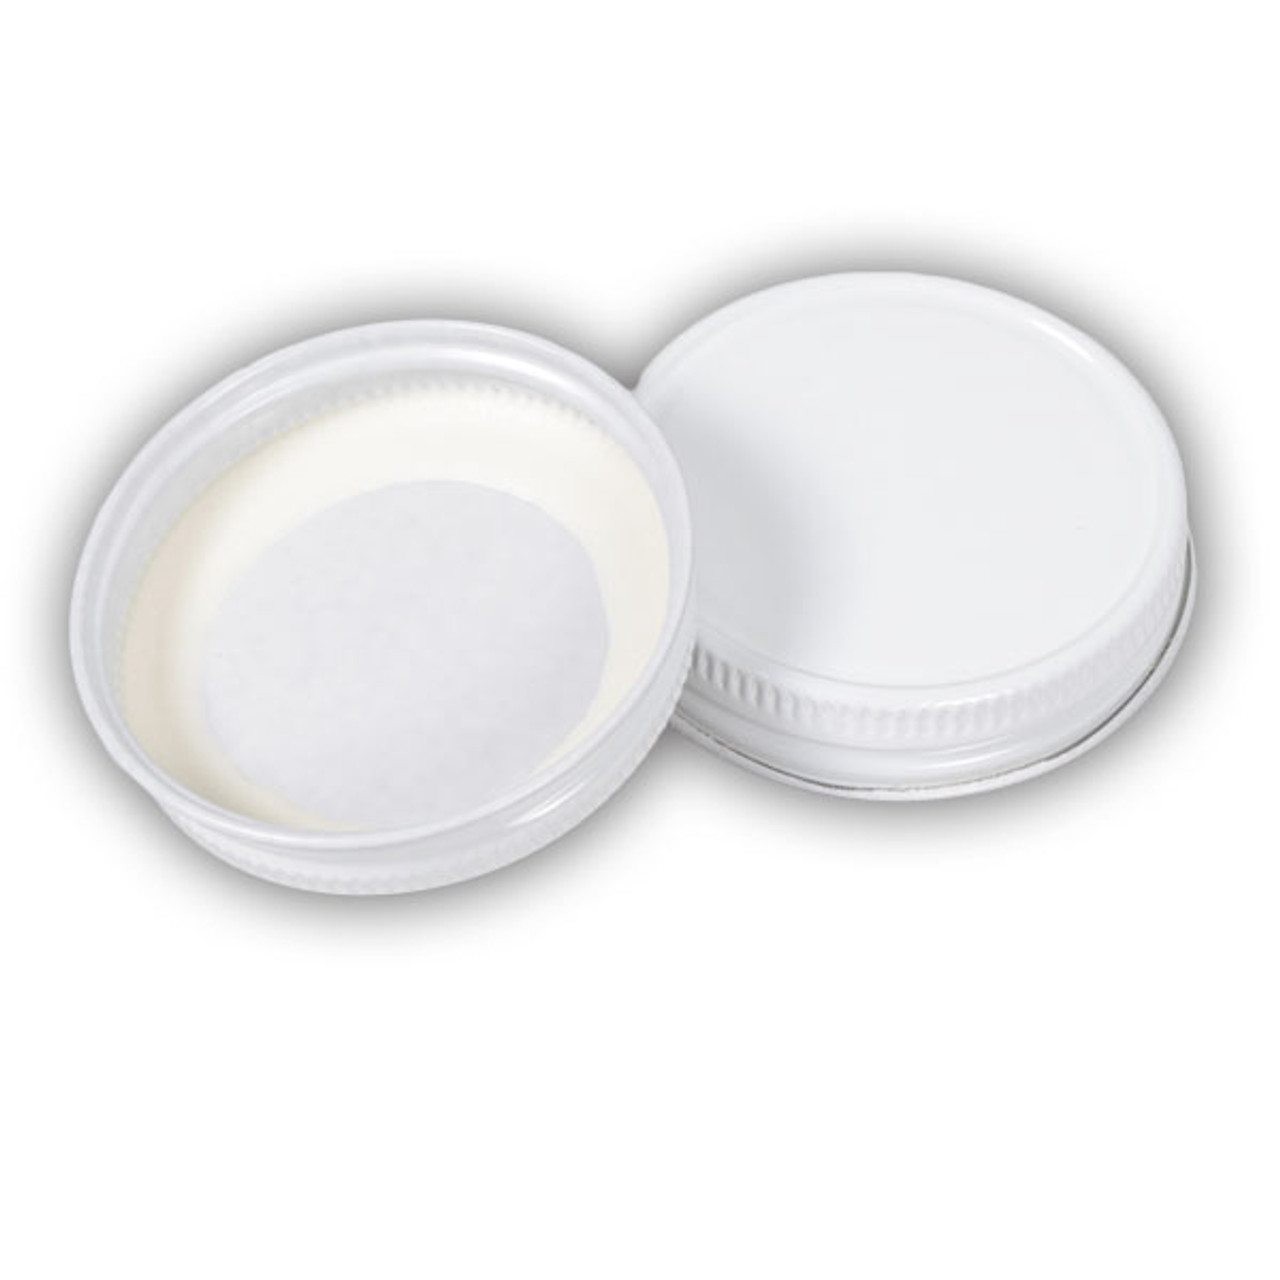 Flint Glass Honey Jar Lids Included | 16 oz Jars with Lids - 12 Count Case